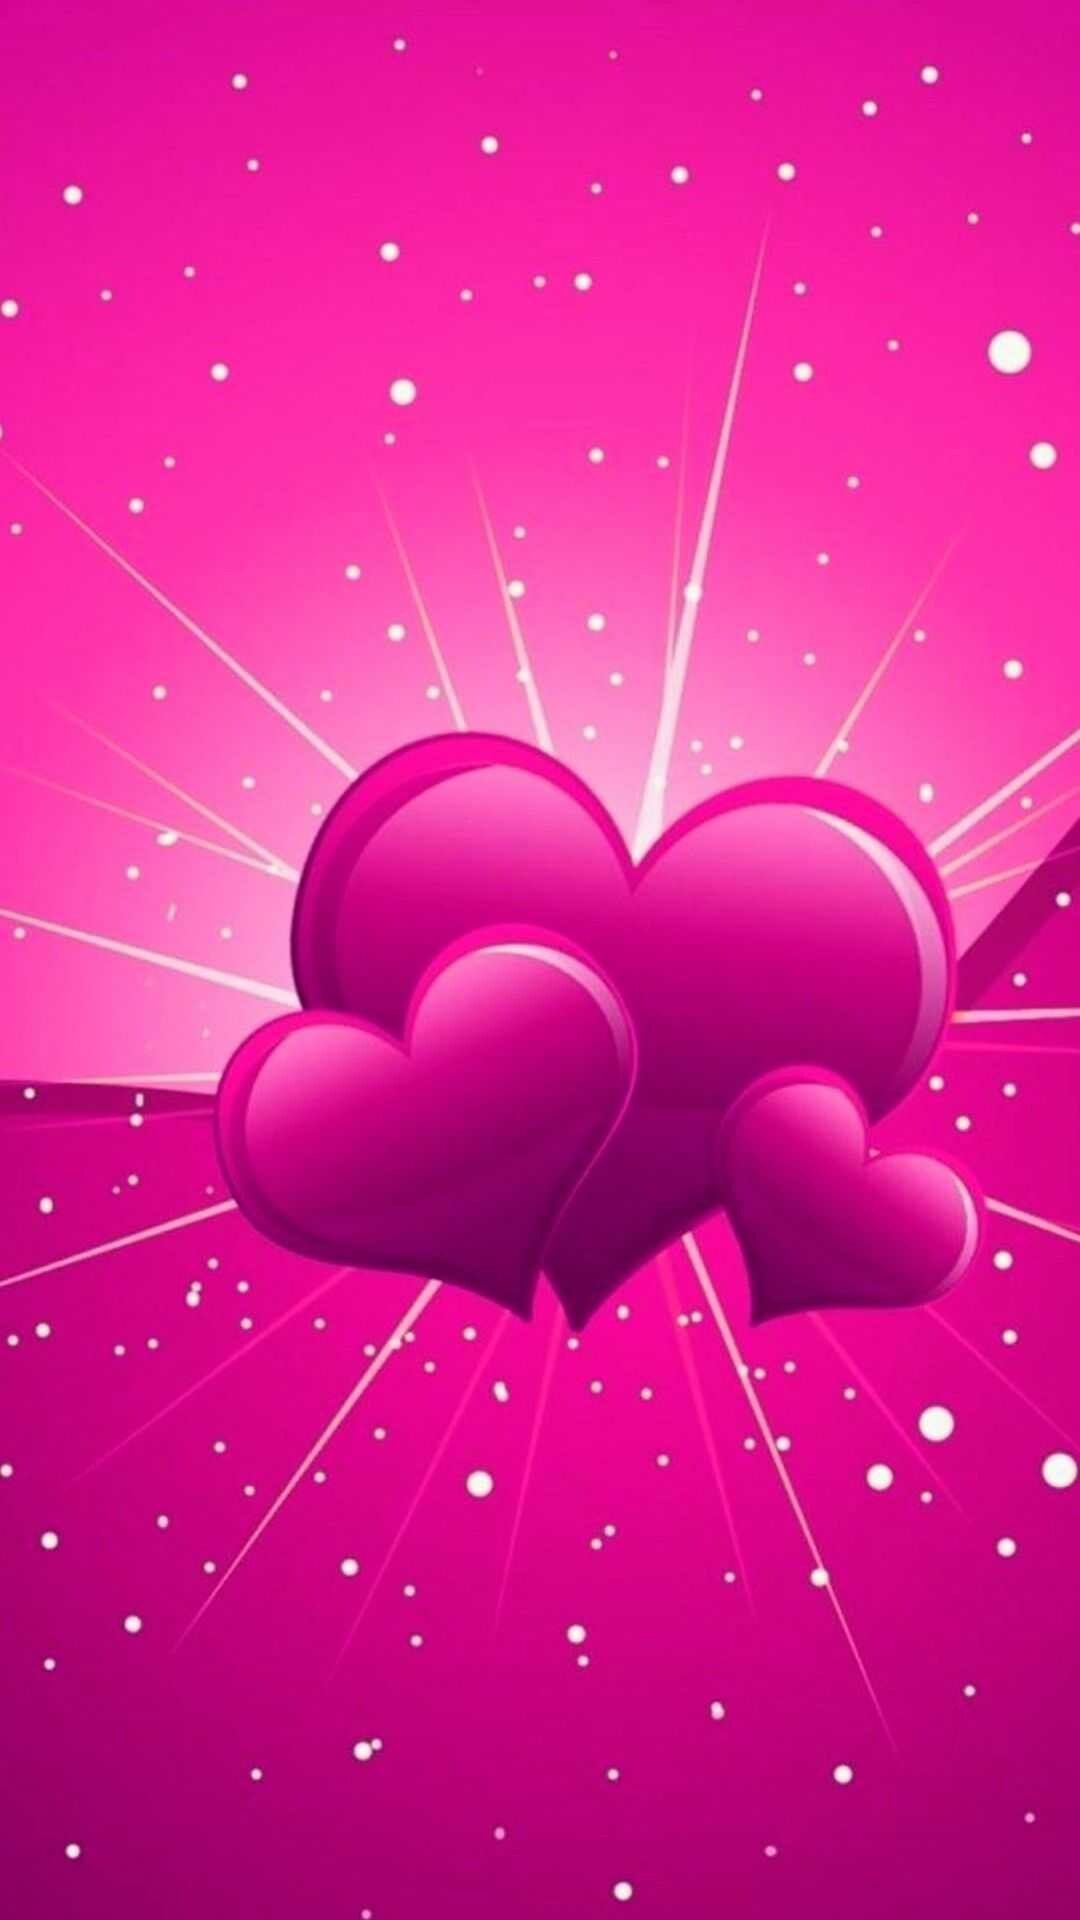 Heart: Valentine's Day, Love banner, Romance. 1080x1920 Full HD Background.